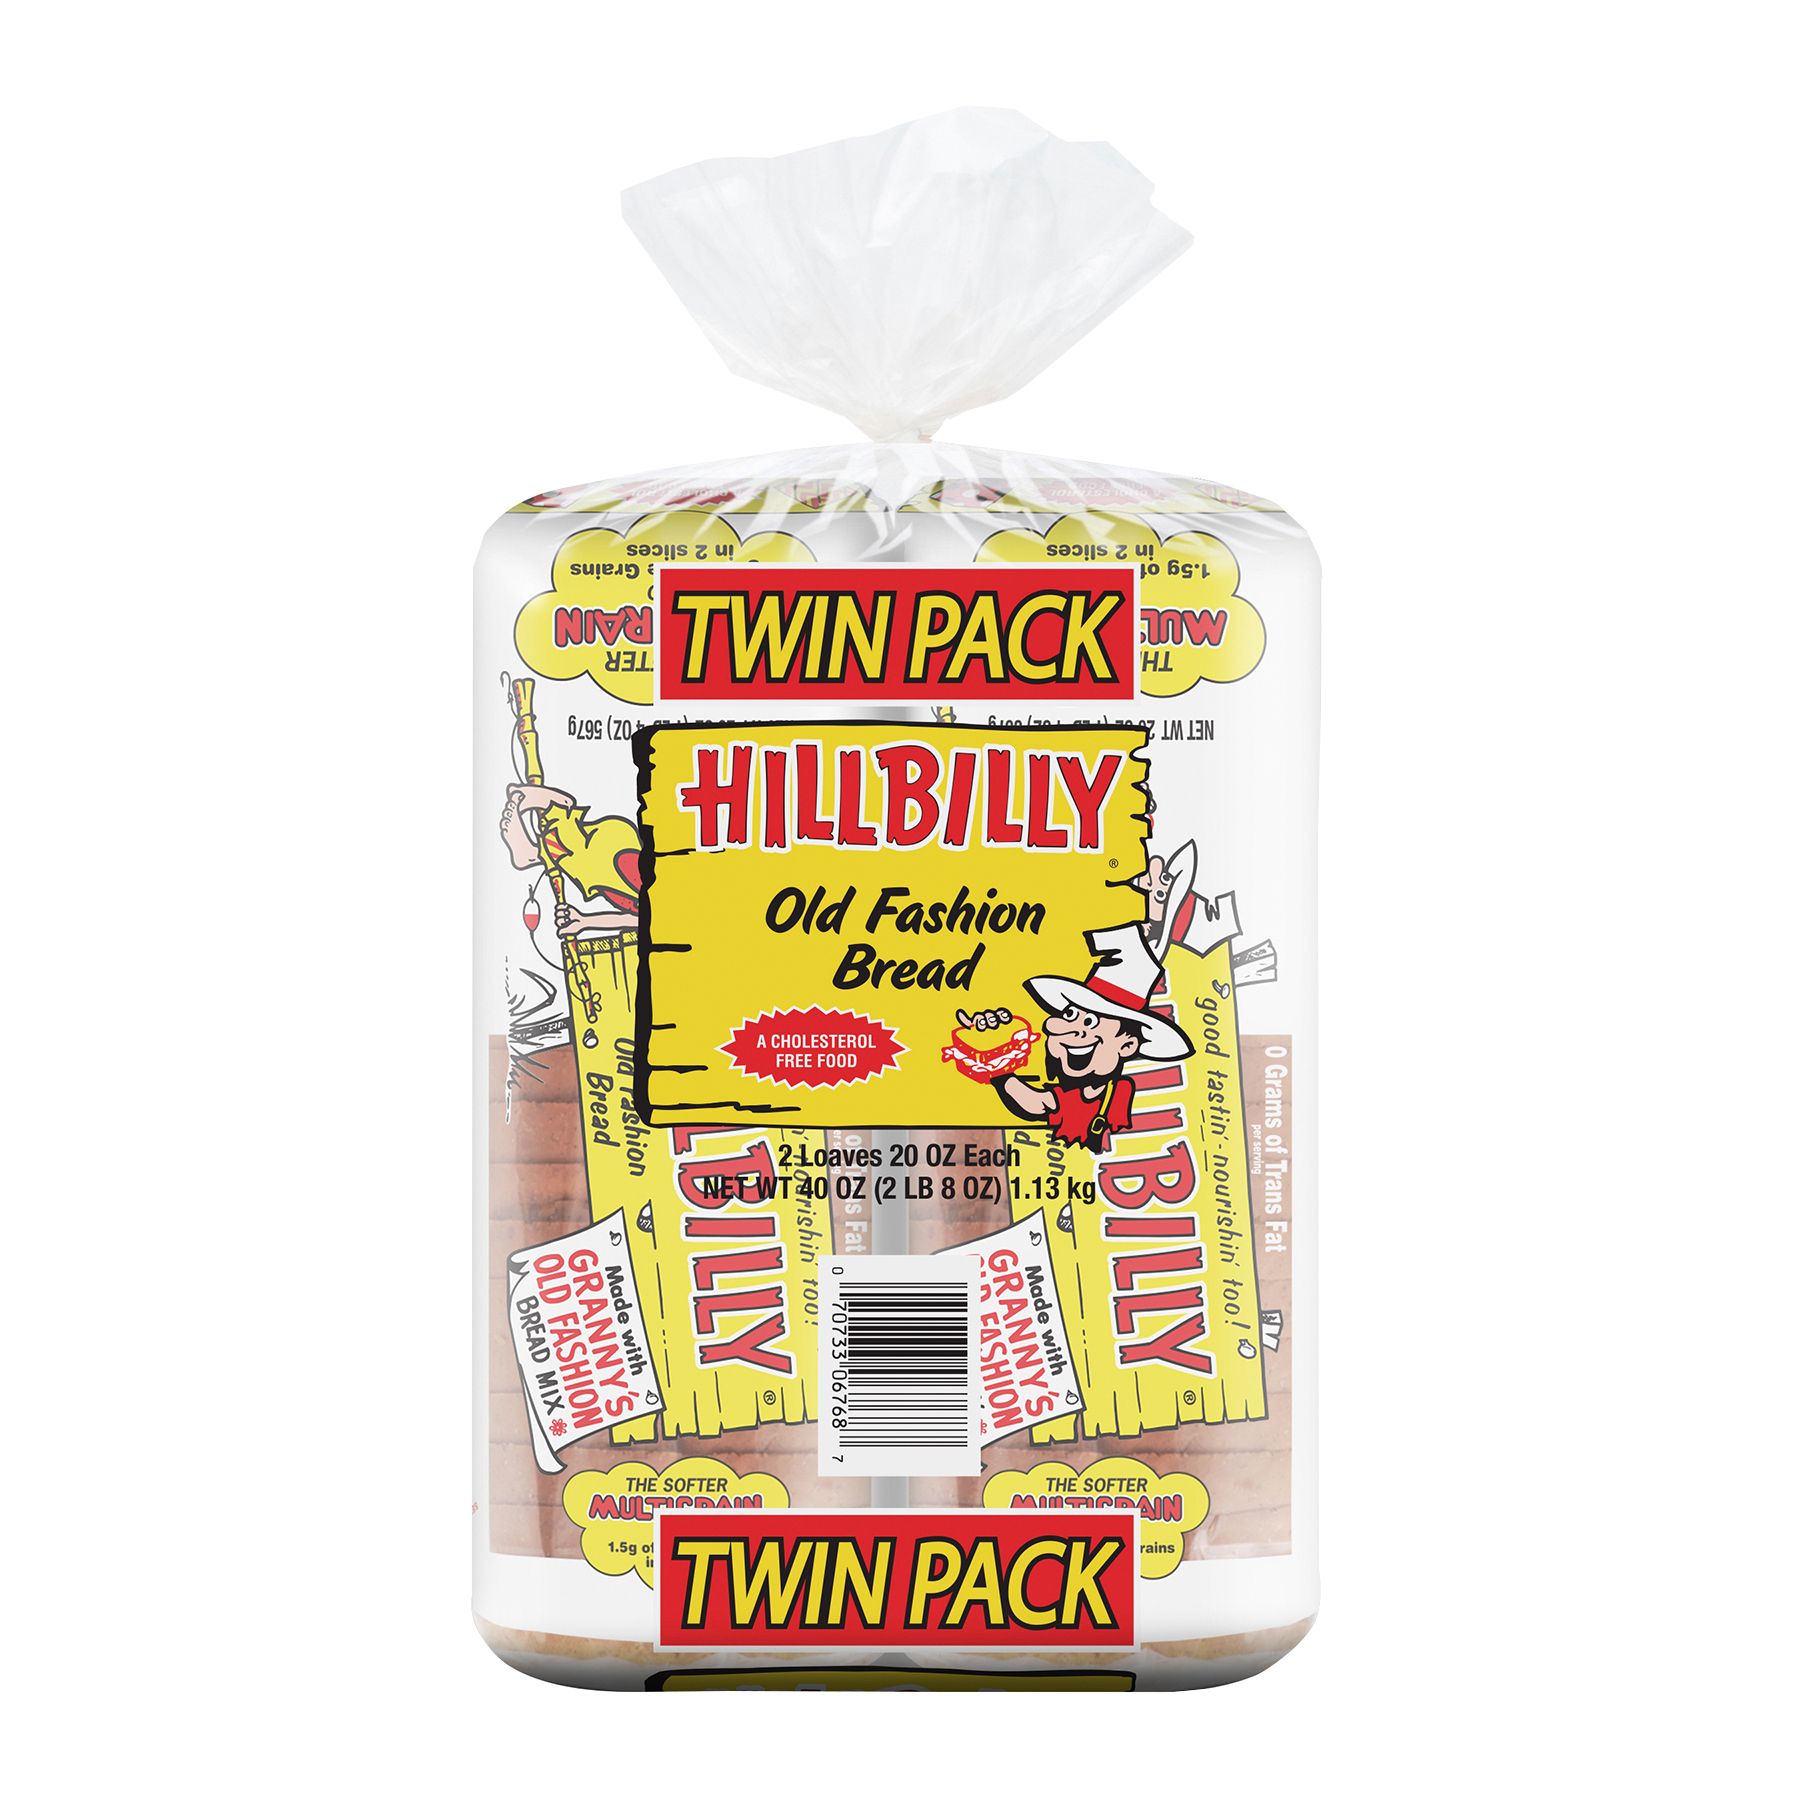 Hillbilly Old Fashion Bread Twin Pack, 40 oz.